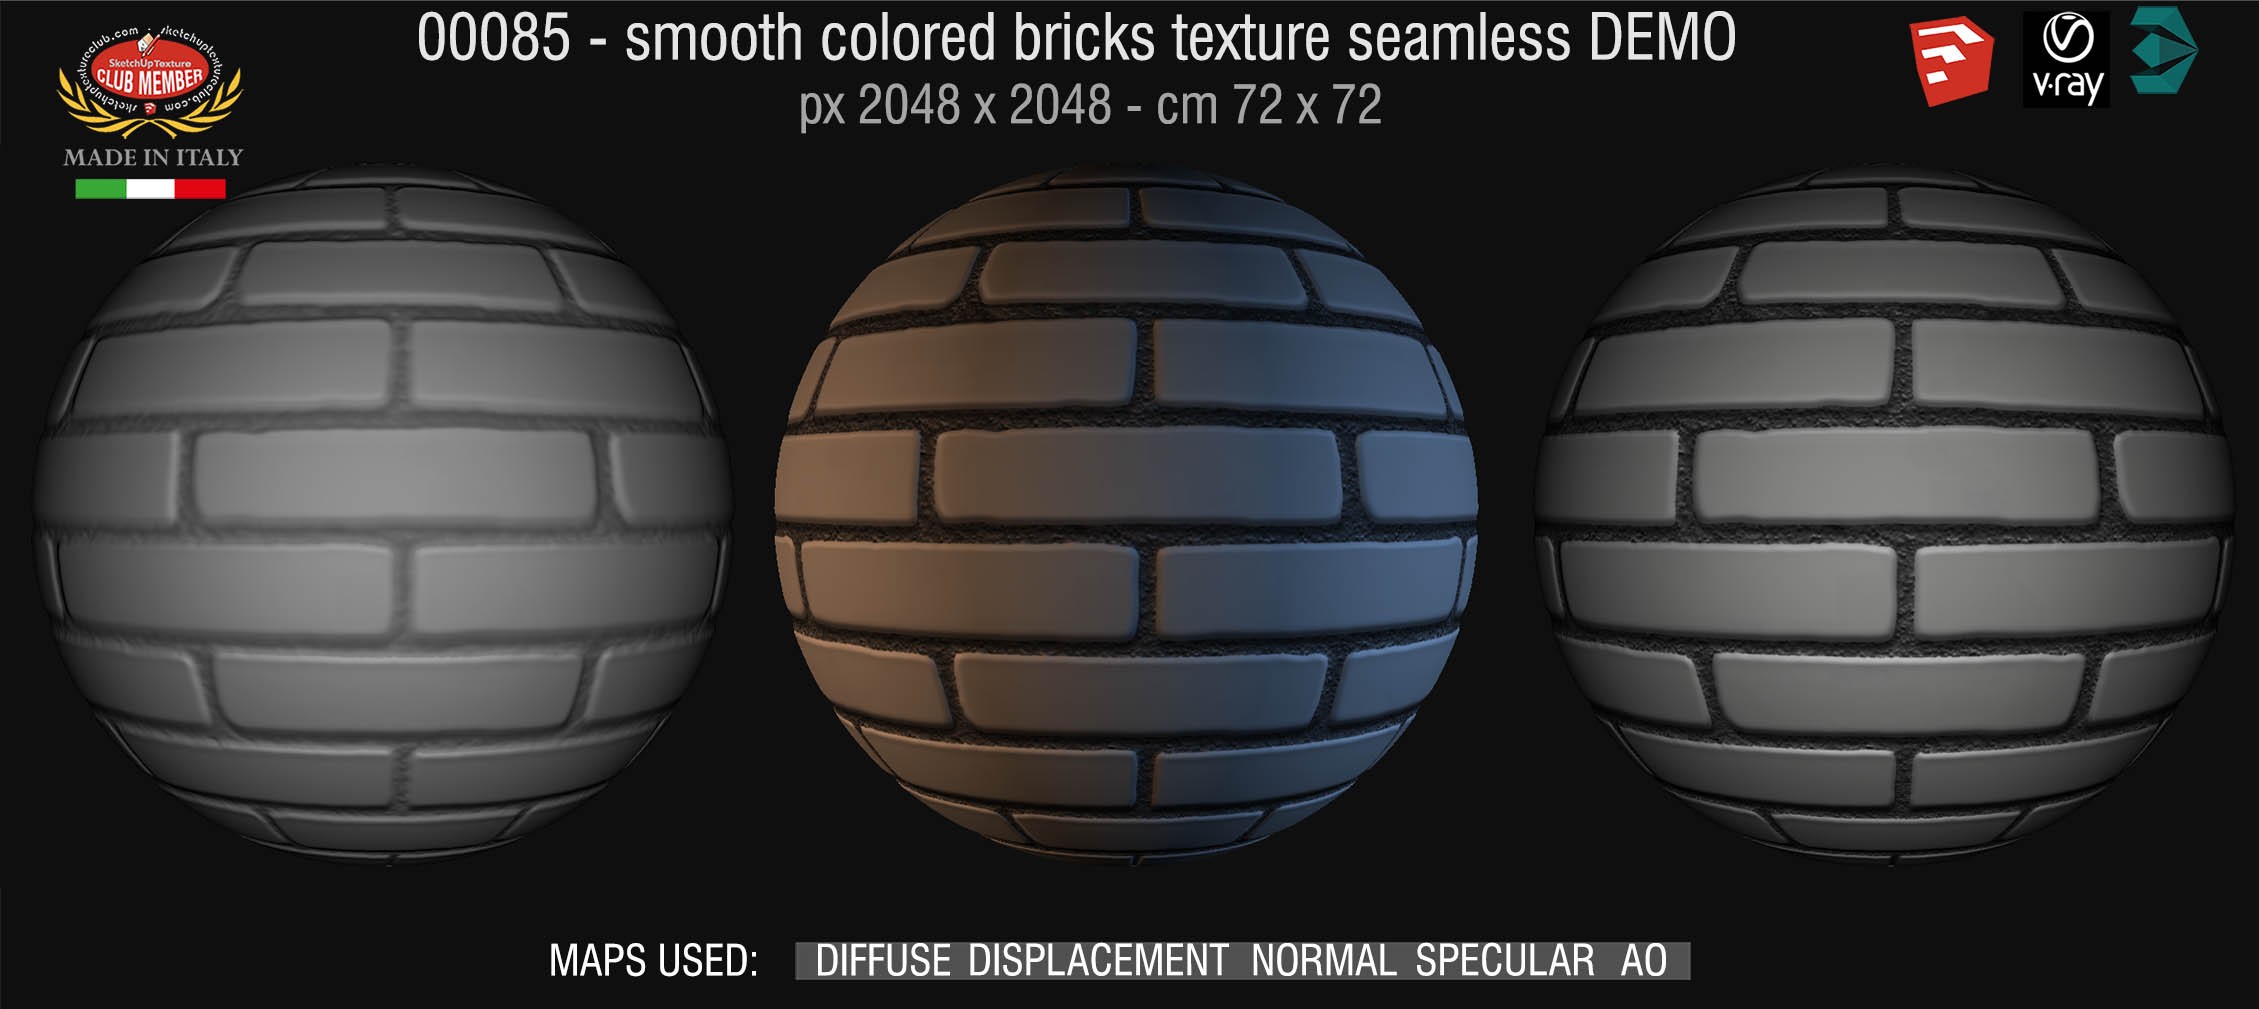 00085 smooth colored bricks texture seamless + maps DEMO